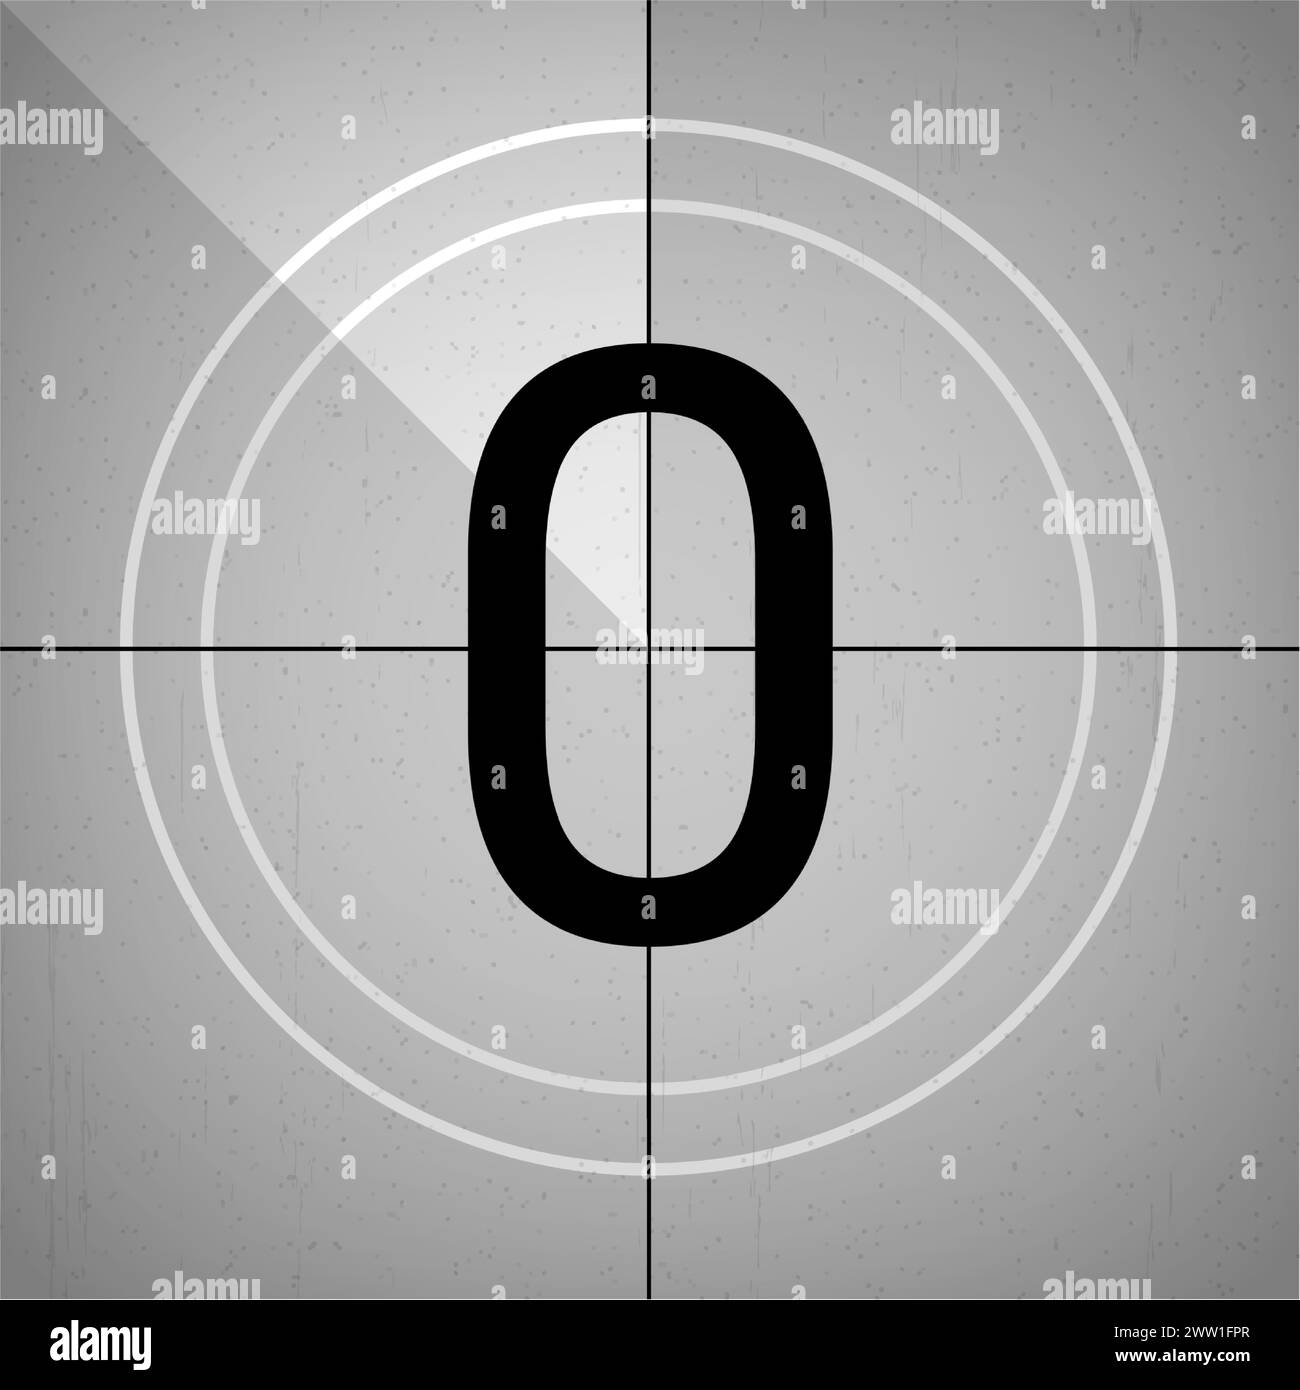 Countdown zero number in retro film frame style Stock Vector